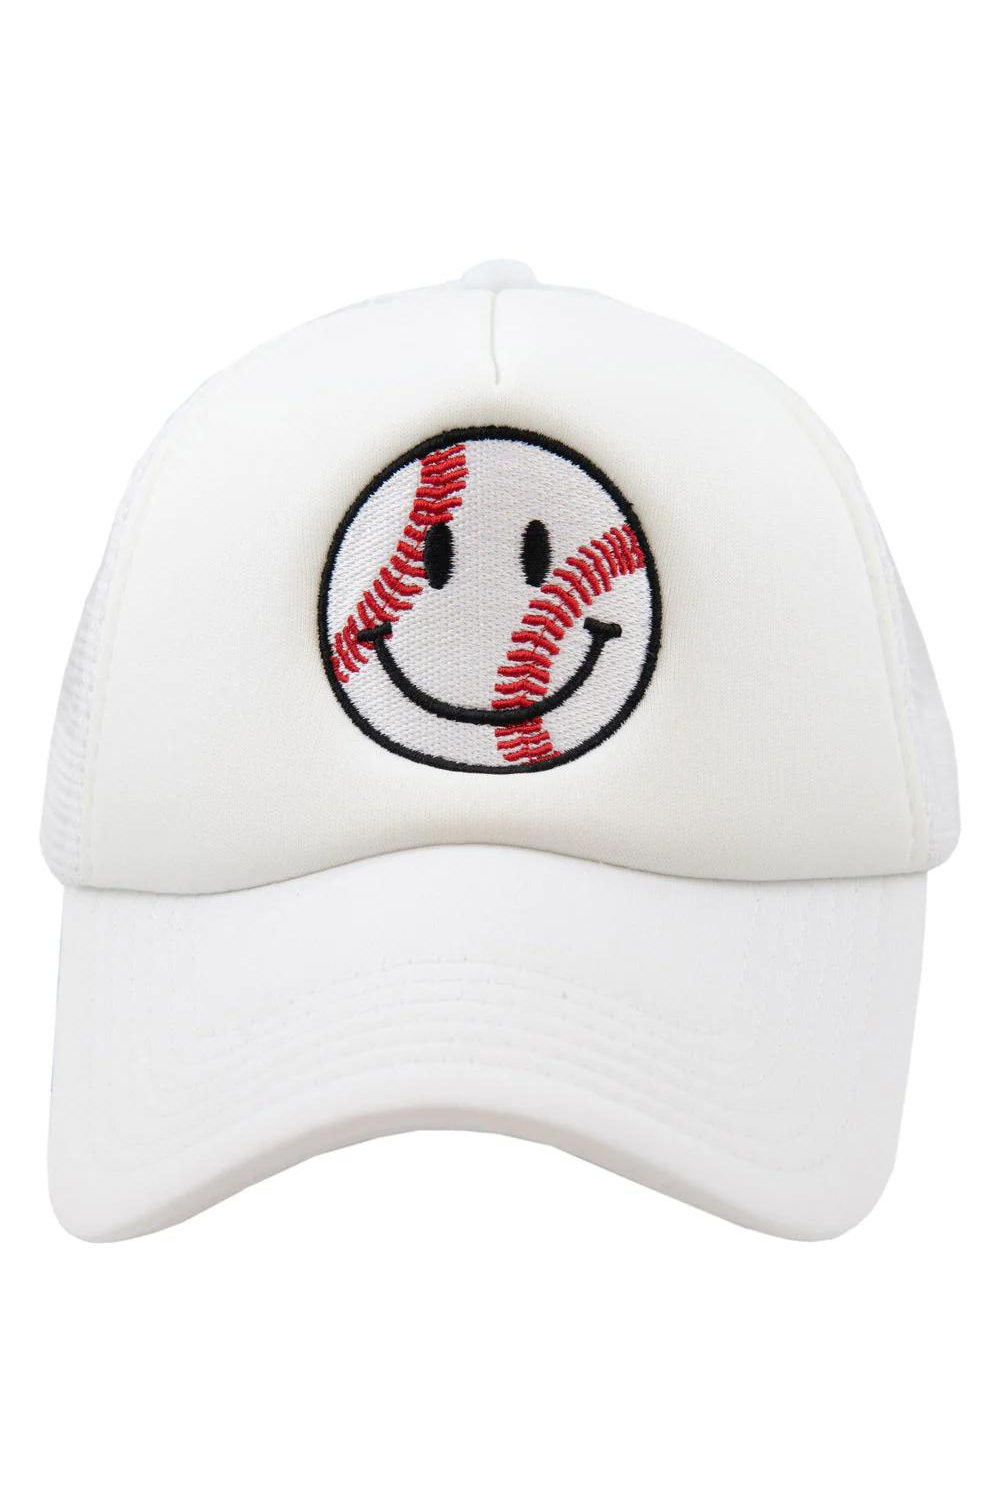 Baseball Happy Face Snapback Hat - PREORDER